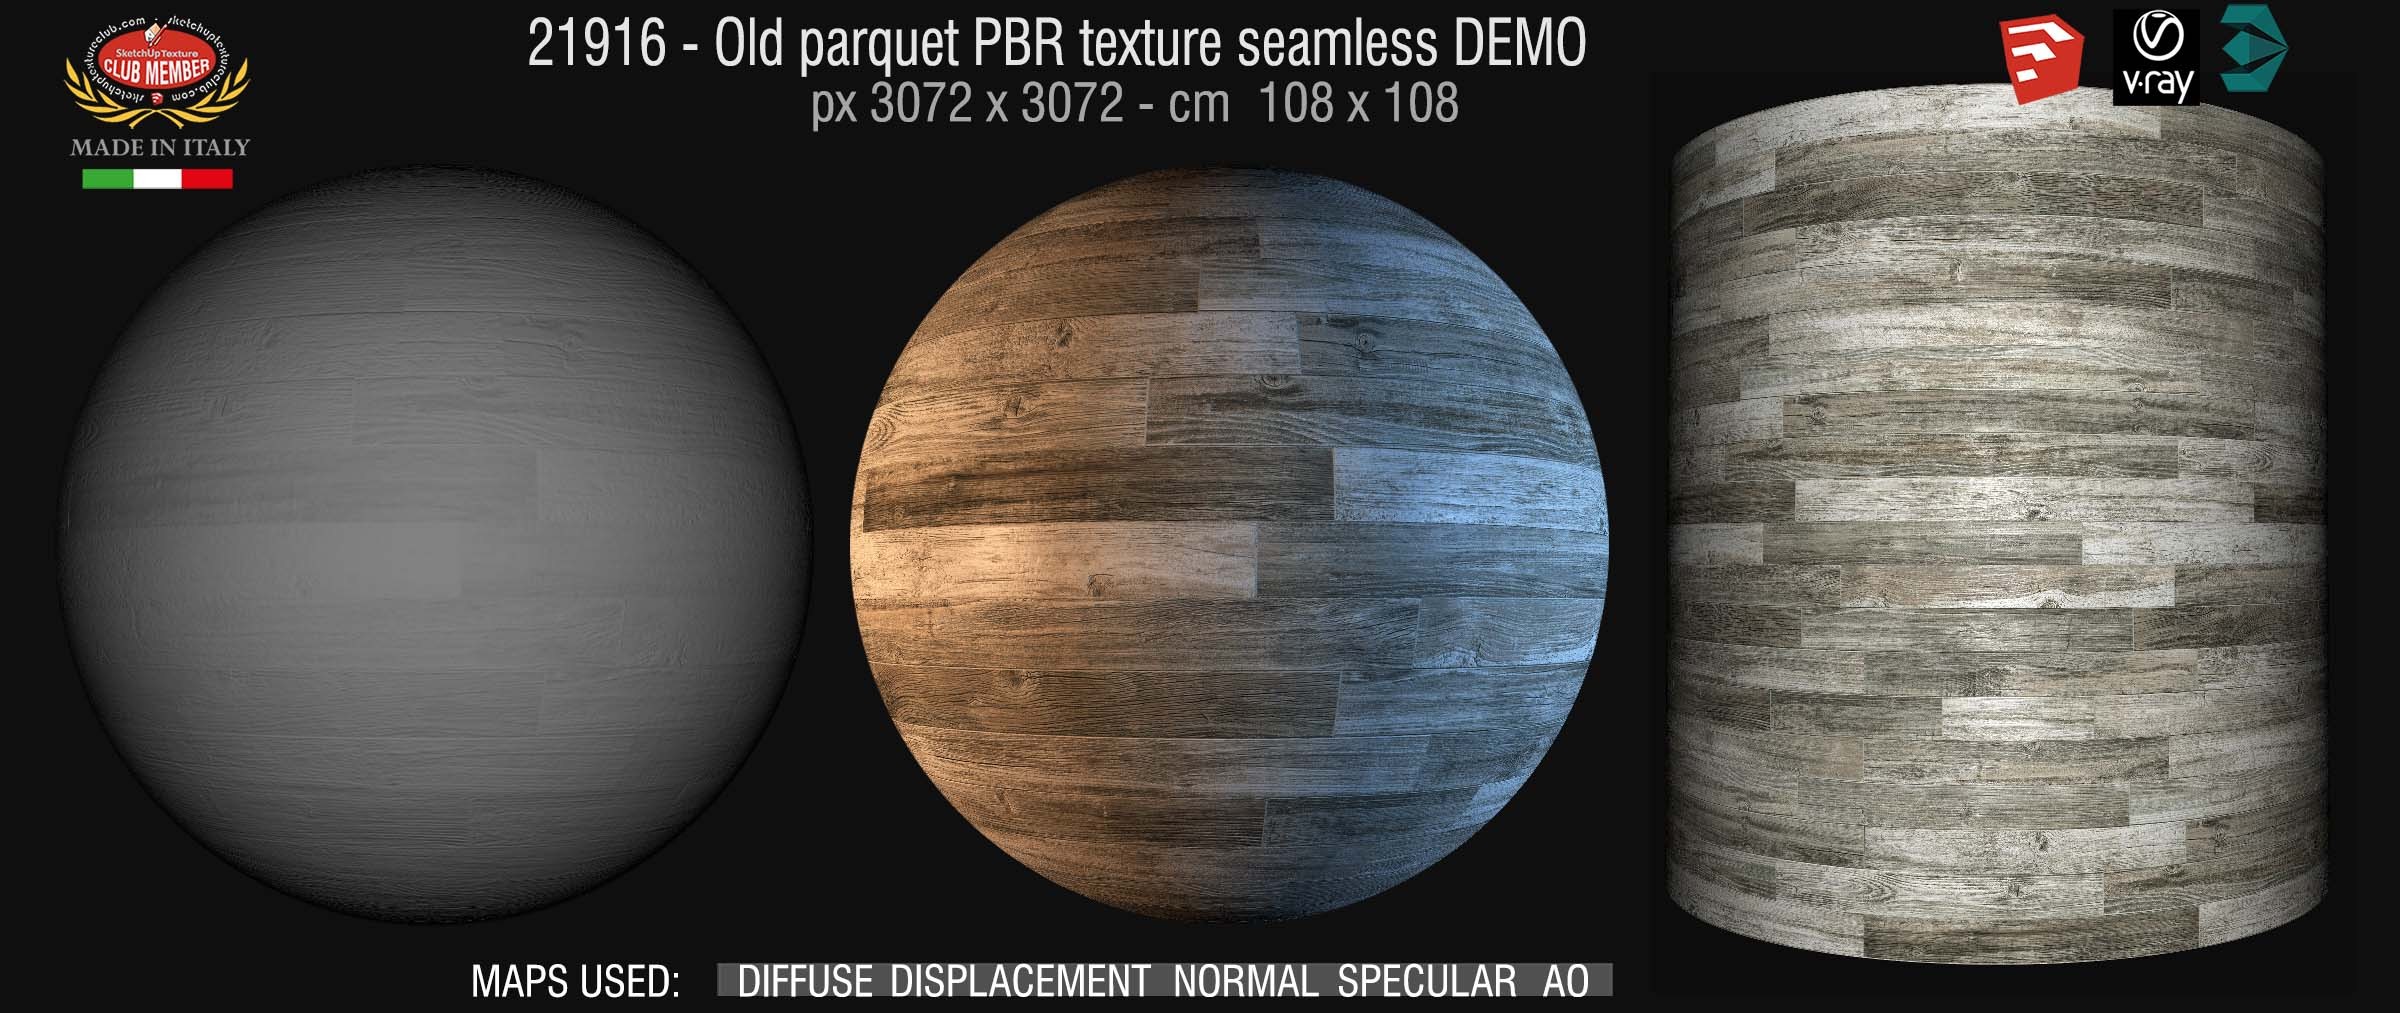 21916 Old parquet PBR texture seamless DEMO